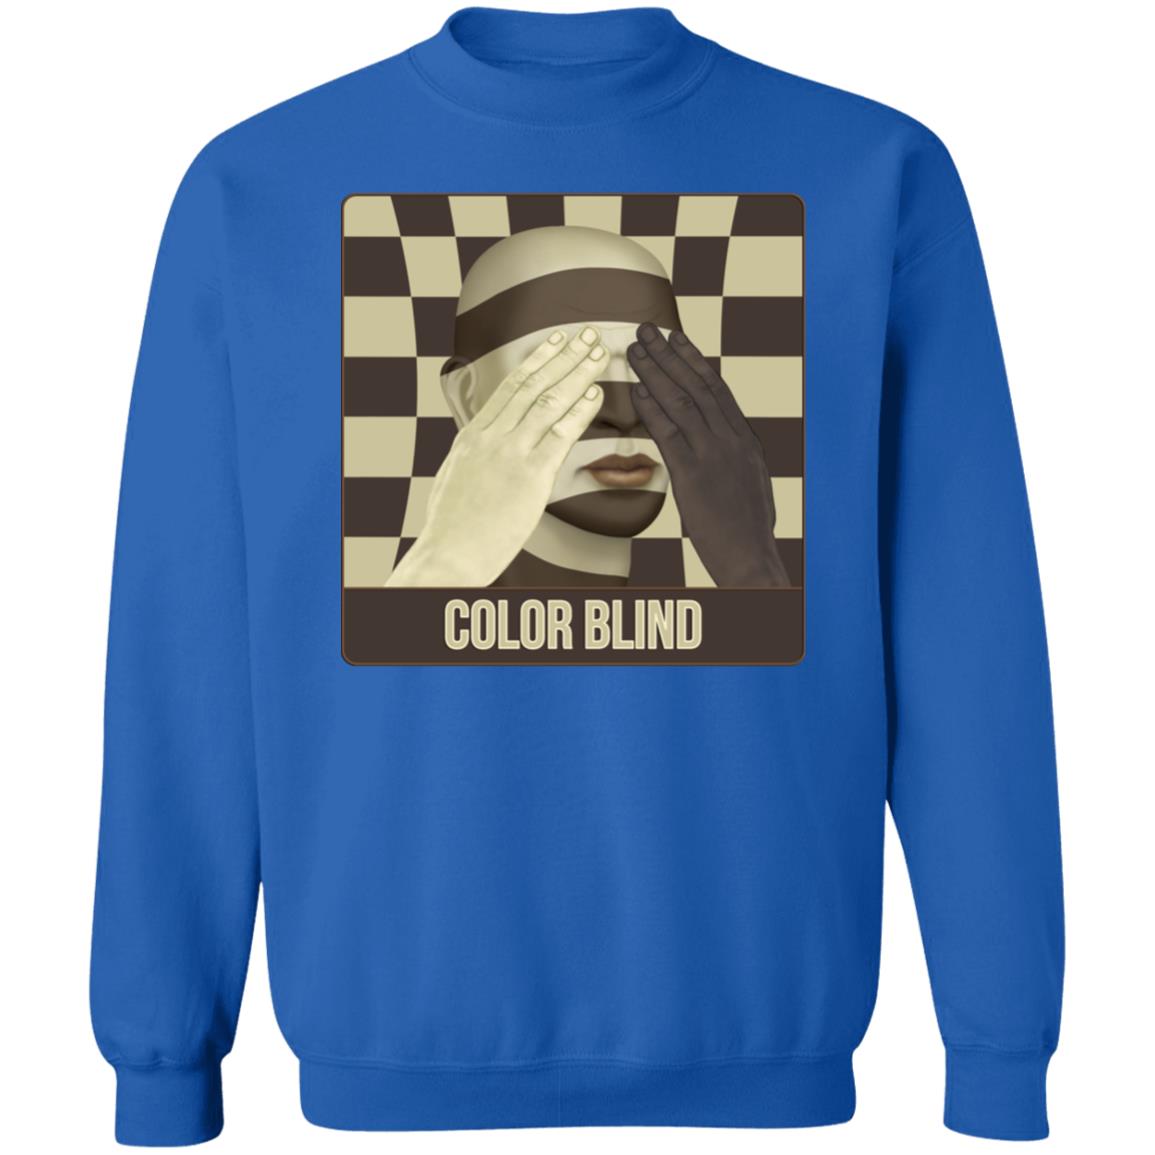 Color Blind - With Text - Unisex Crew Neck Sweatshirt